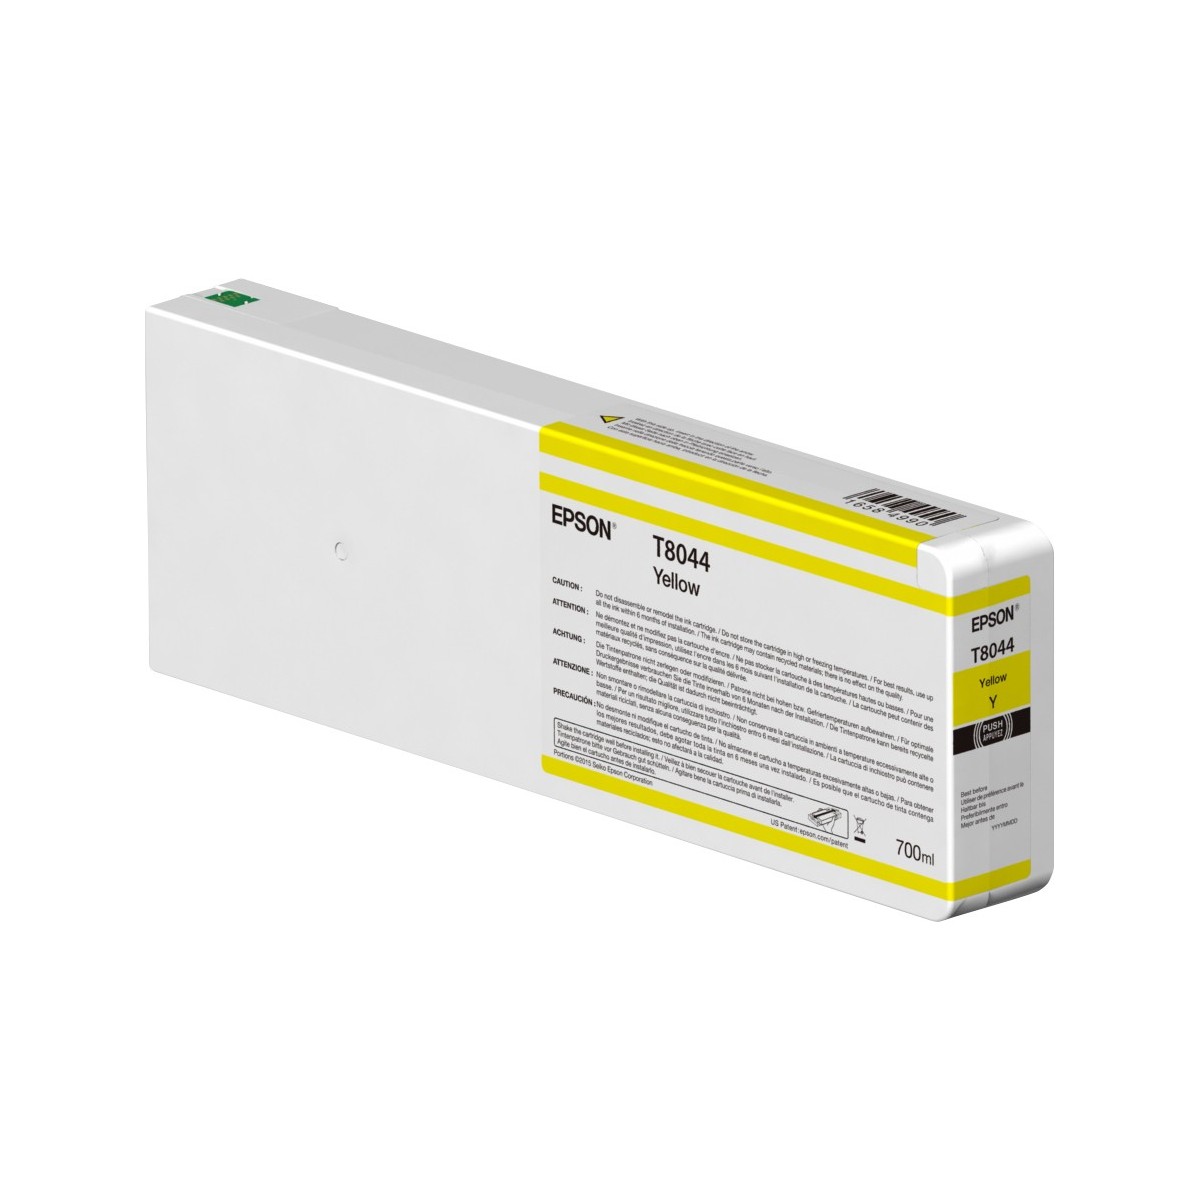 Epson Singlepack Yellow T804400 UltraChrome HDX/HD 700ml - Pigment-based ink - 700 ml - 1 pc(s)